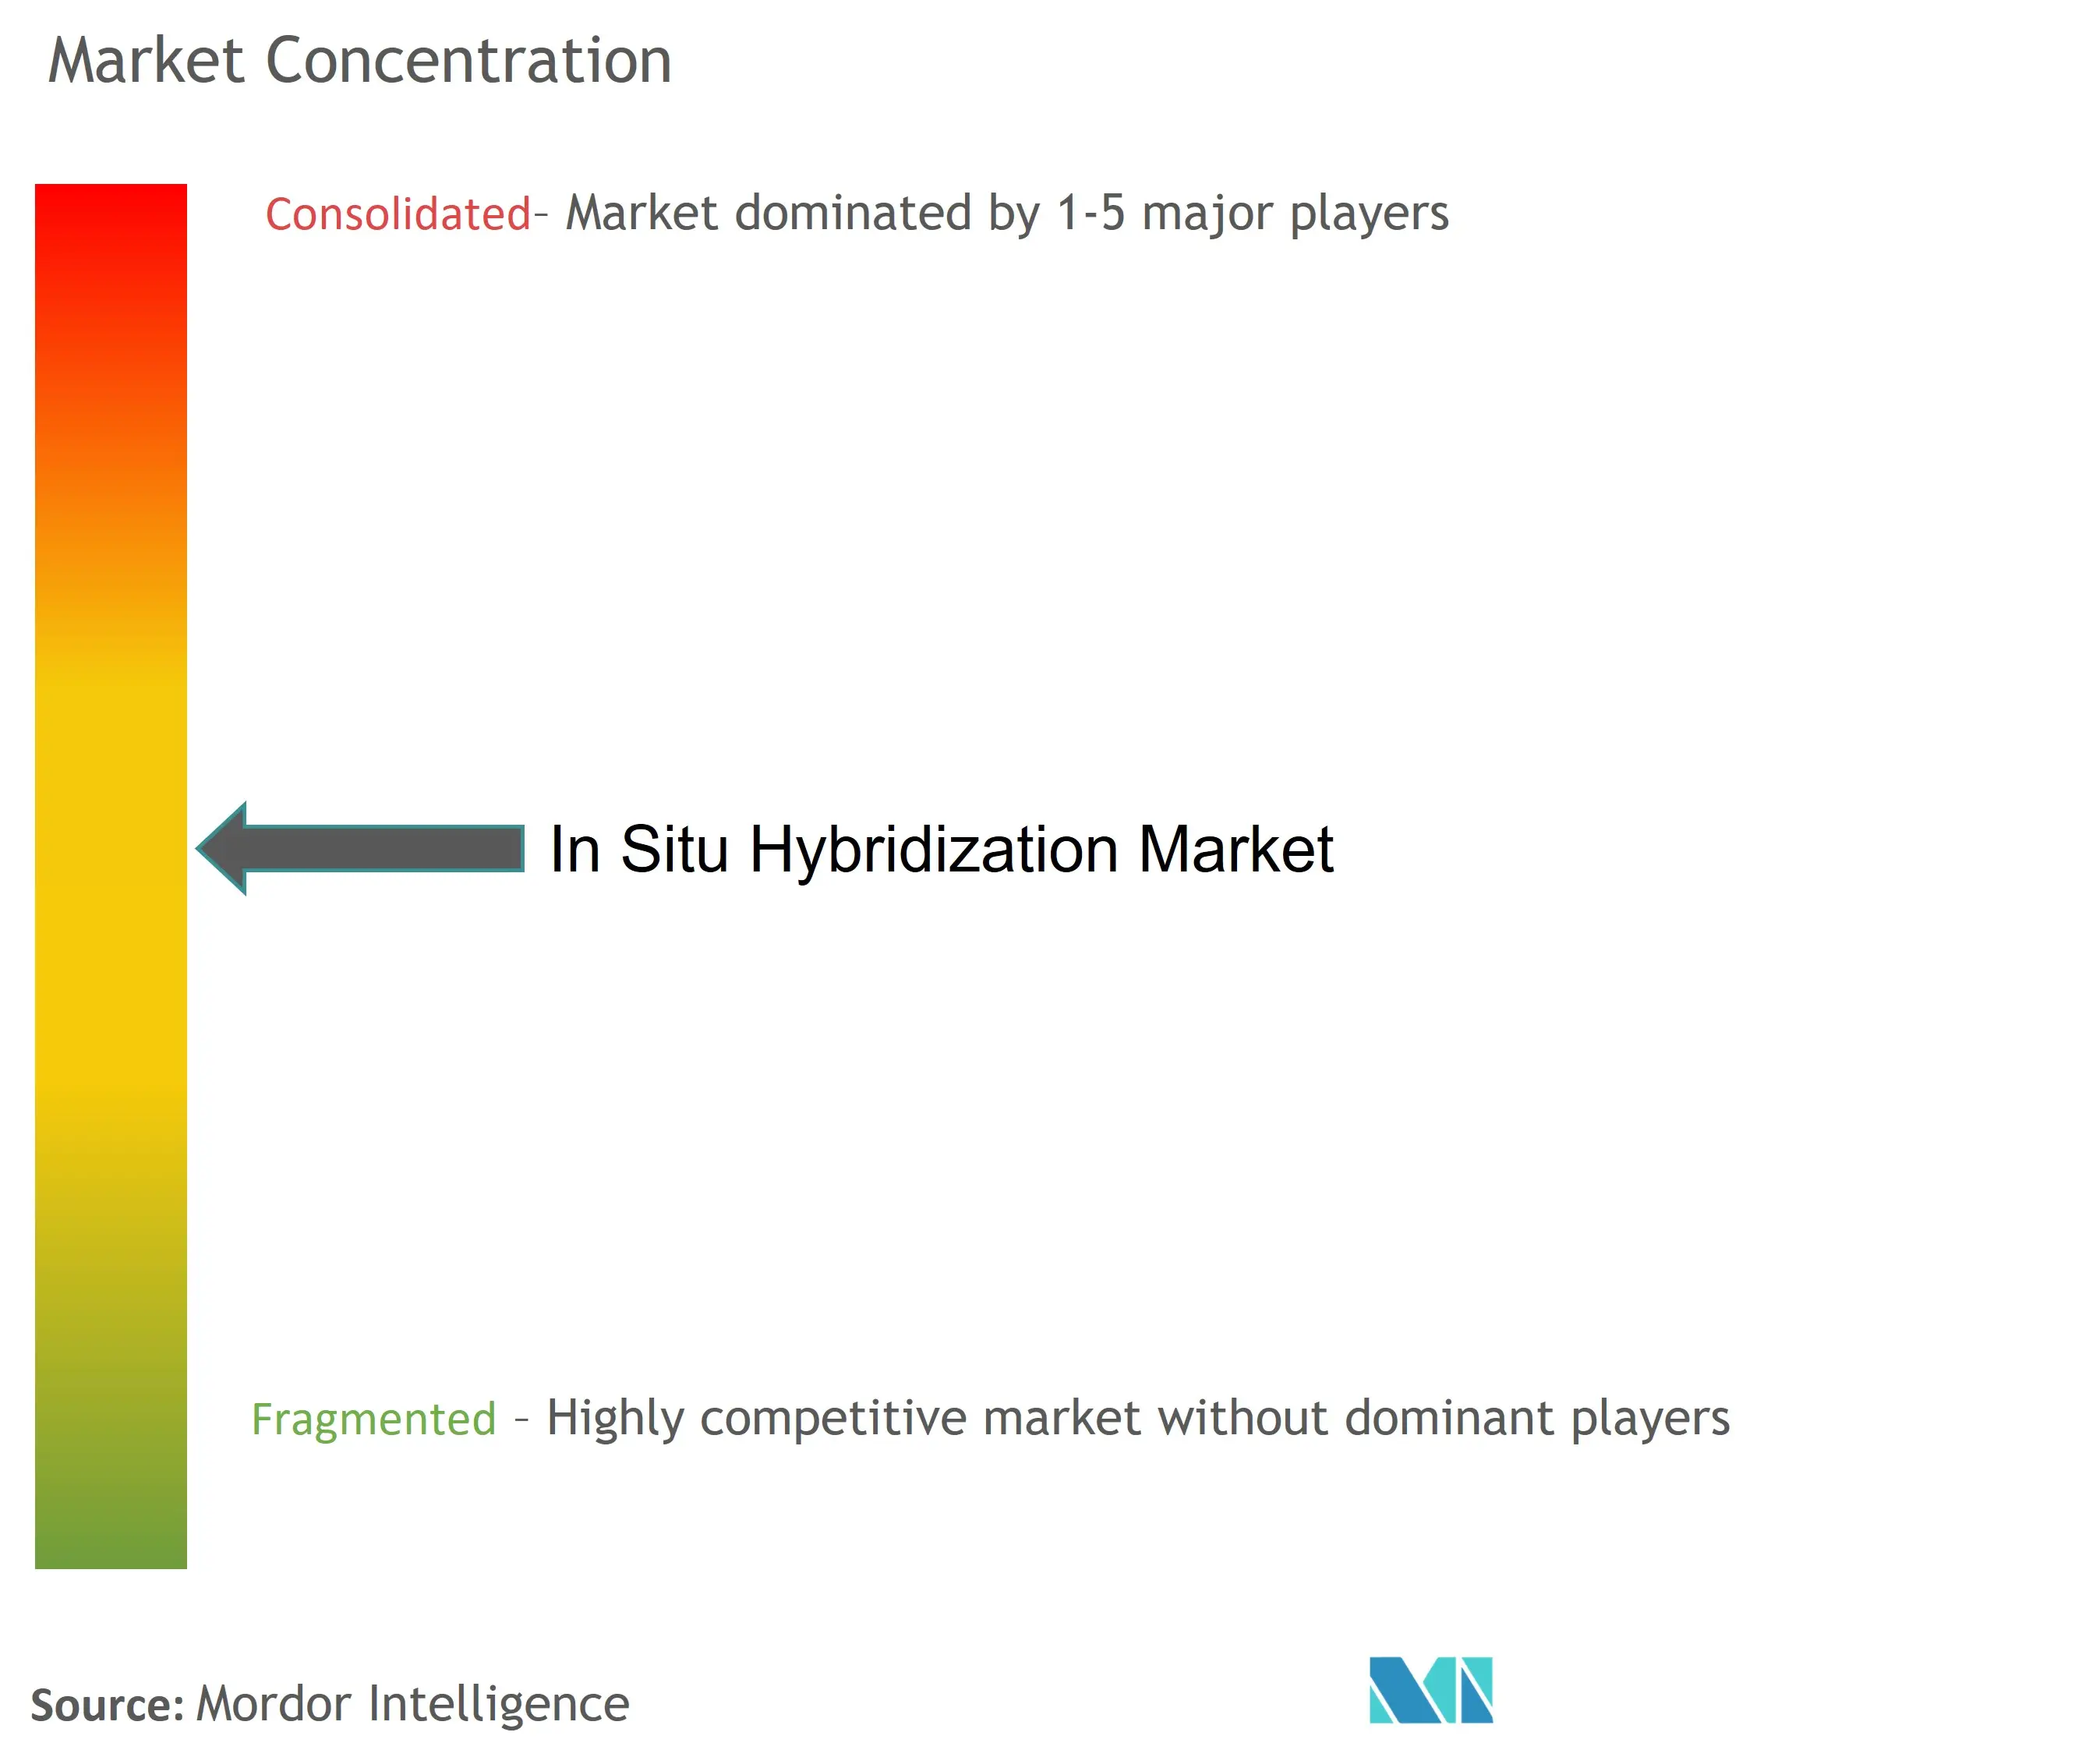 In Situ Hybridization Market Concentration